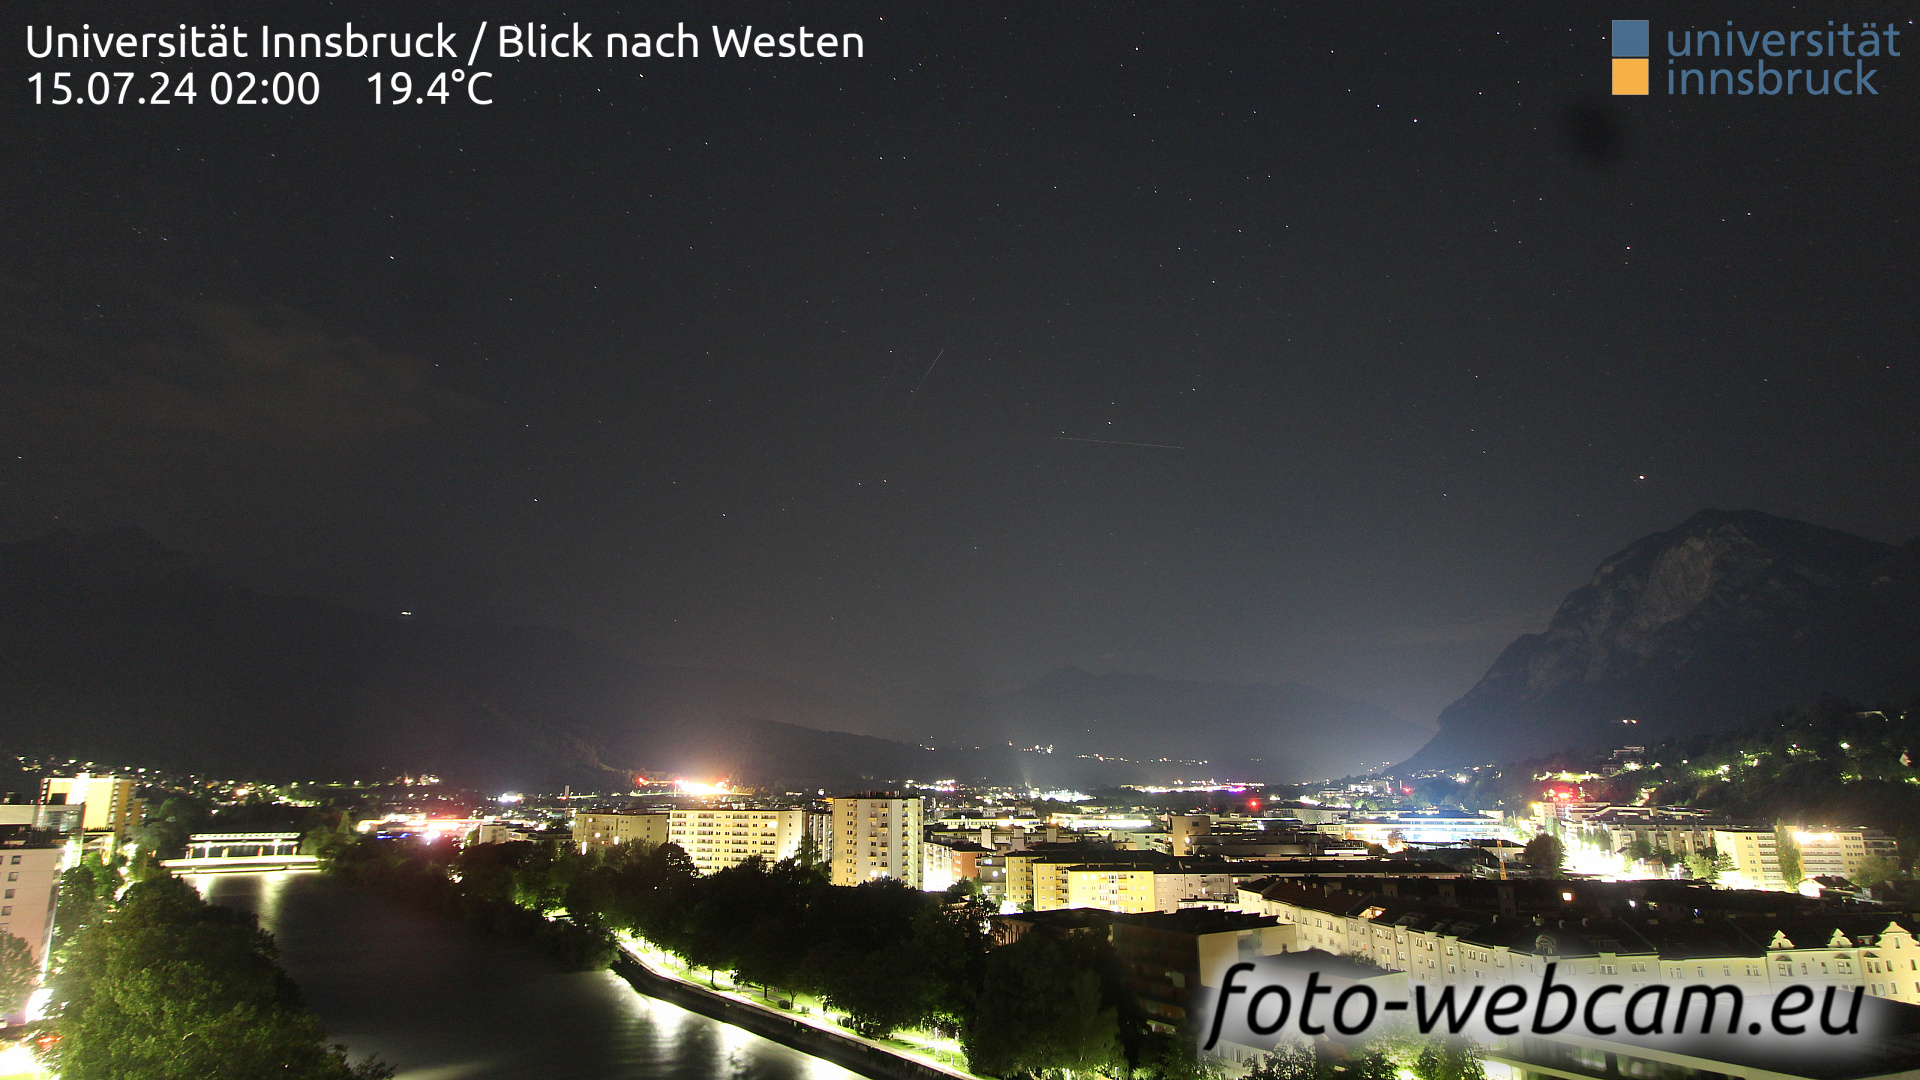 Innsbruck Fr. 02:17